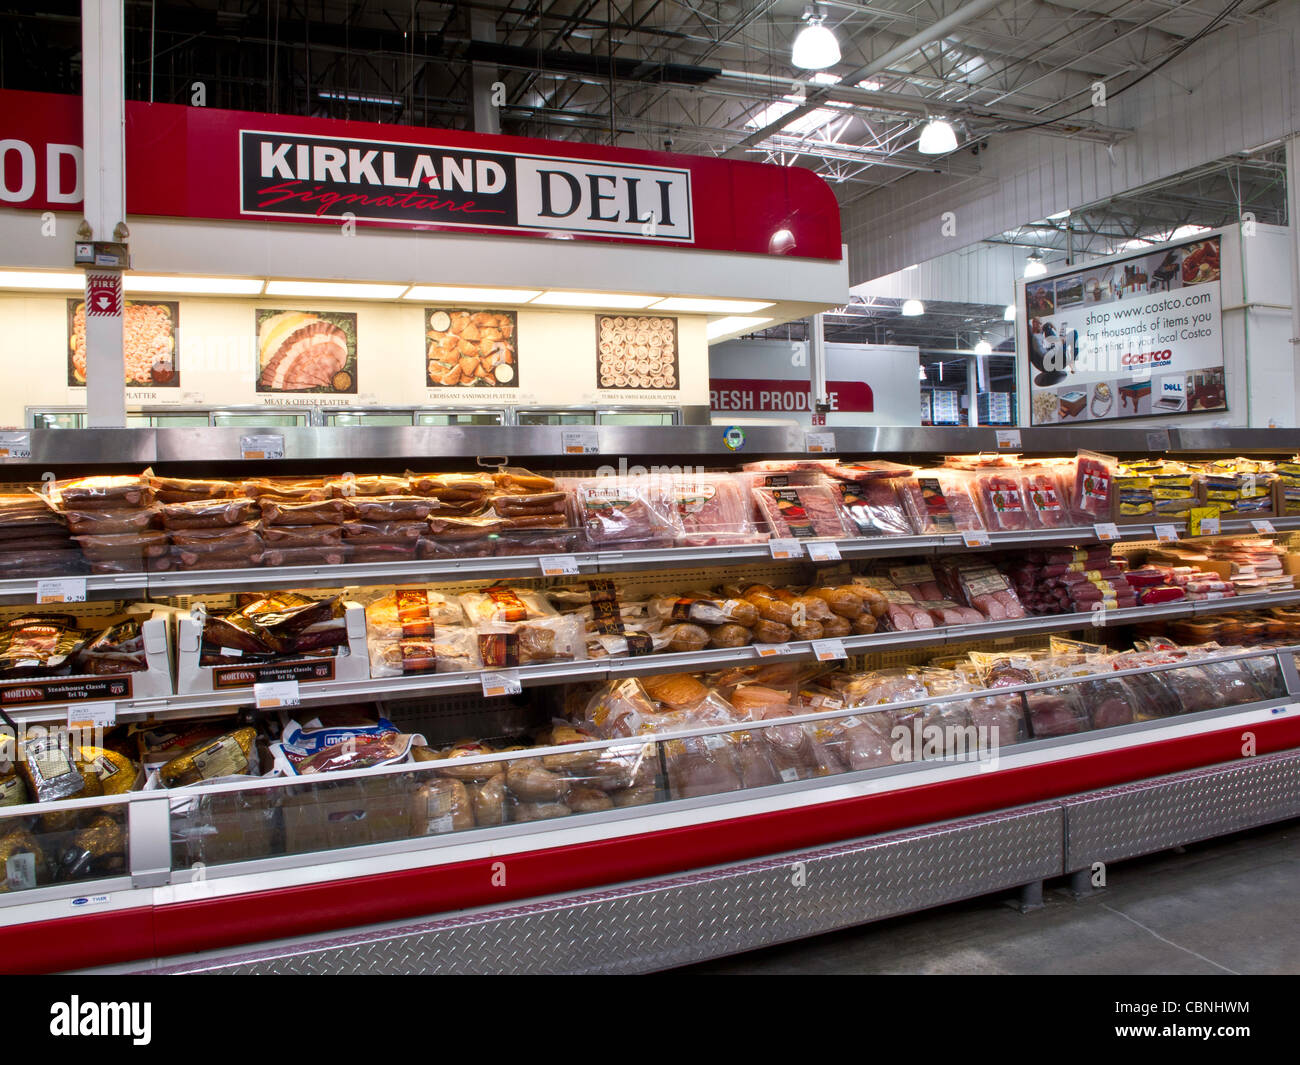 Costco Wholesale Warehouse Store in Massachusetts, USA Stock Photo